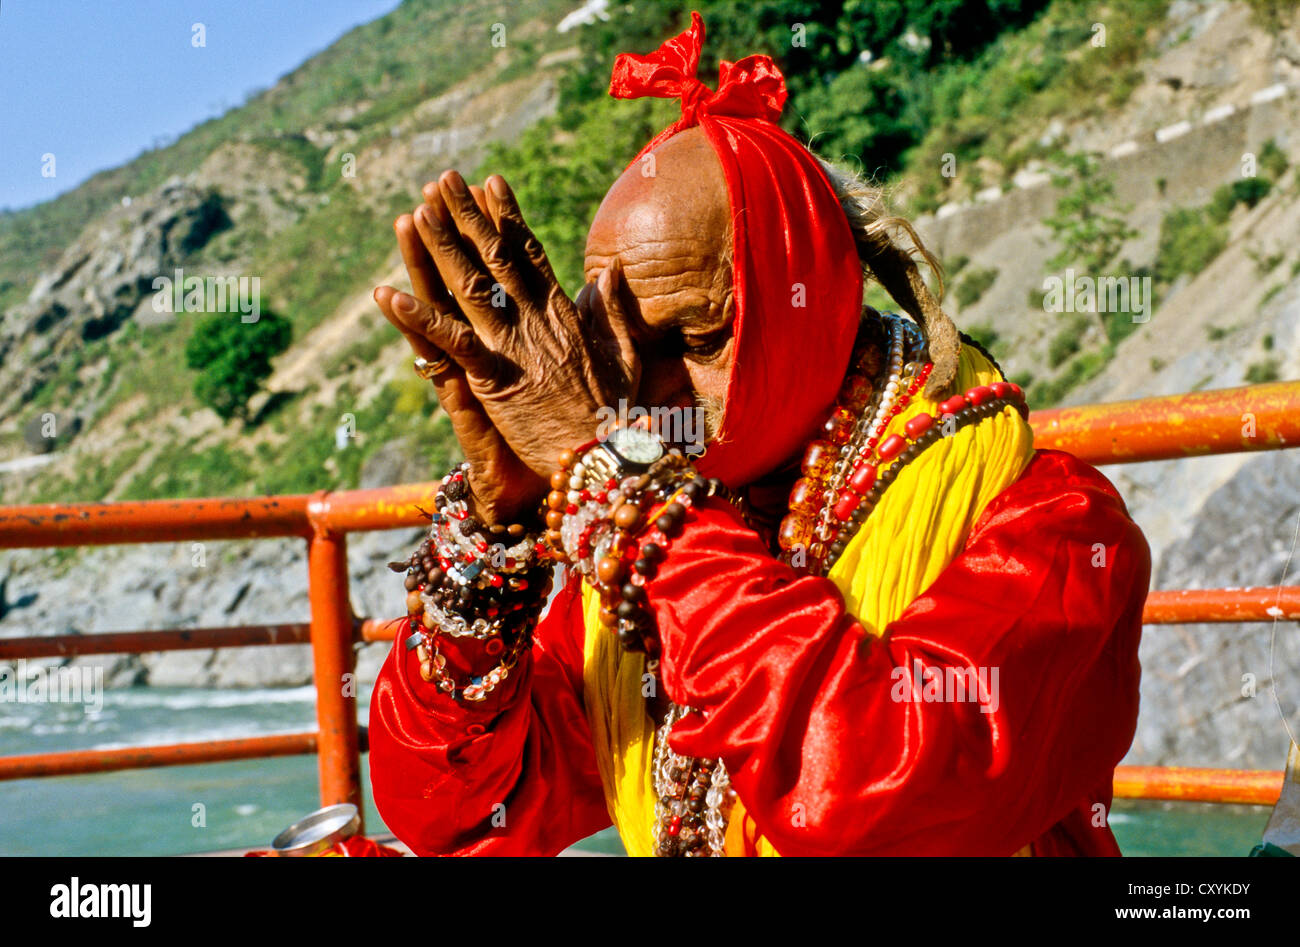 Sadhu, holy man, praying at Devprayag, the confluence of the holy rivers Baghirati and Alakananda, Devprayag, India, Asia Stock Photo